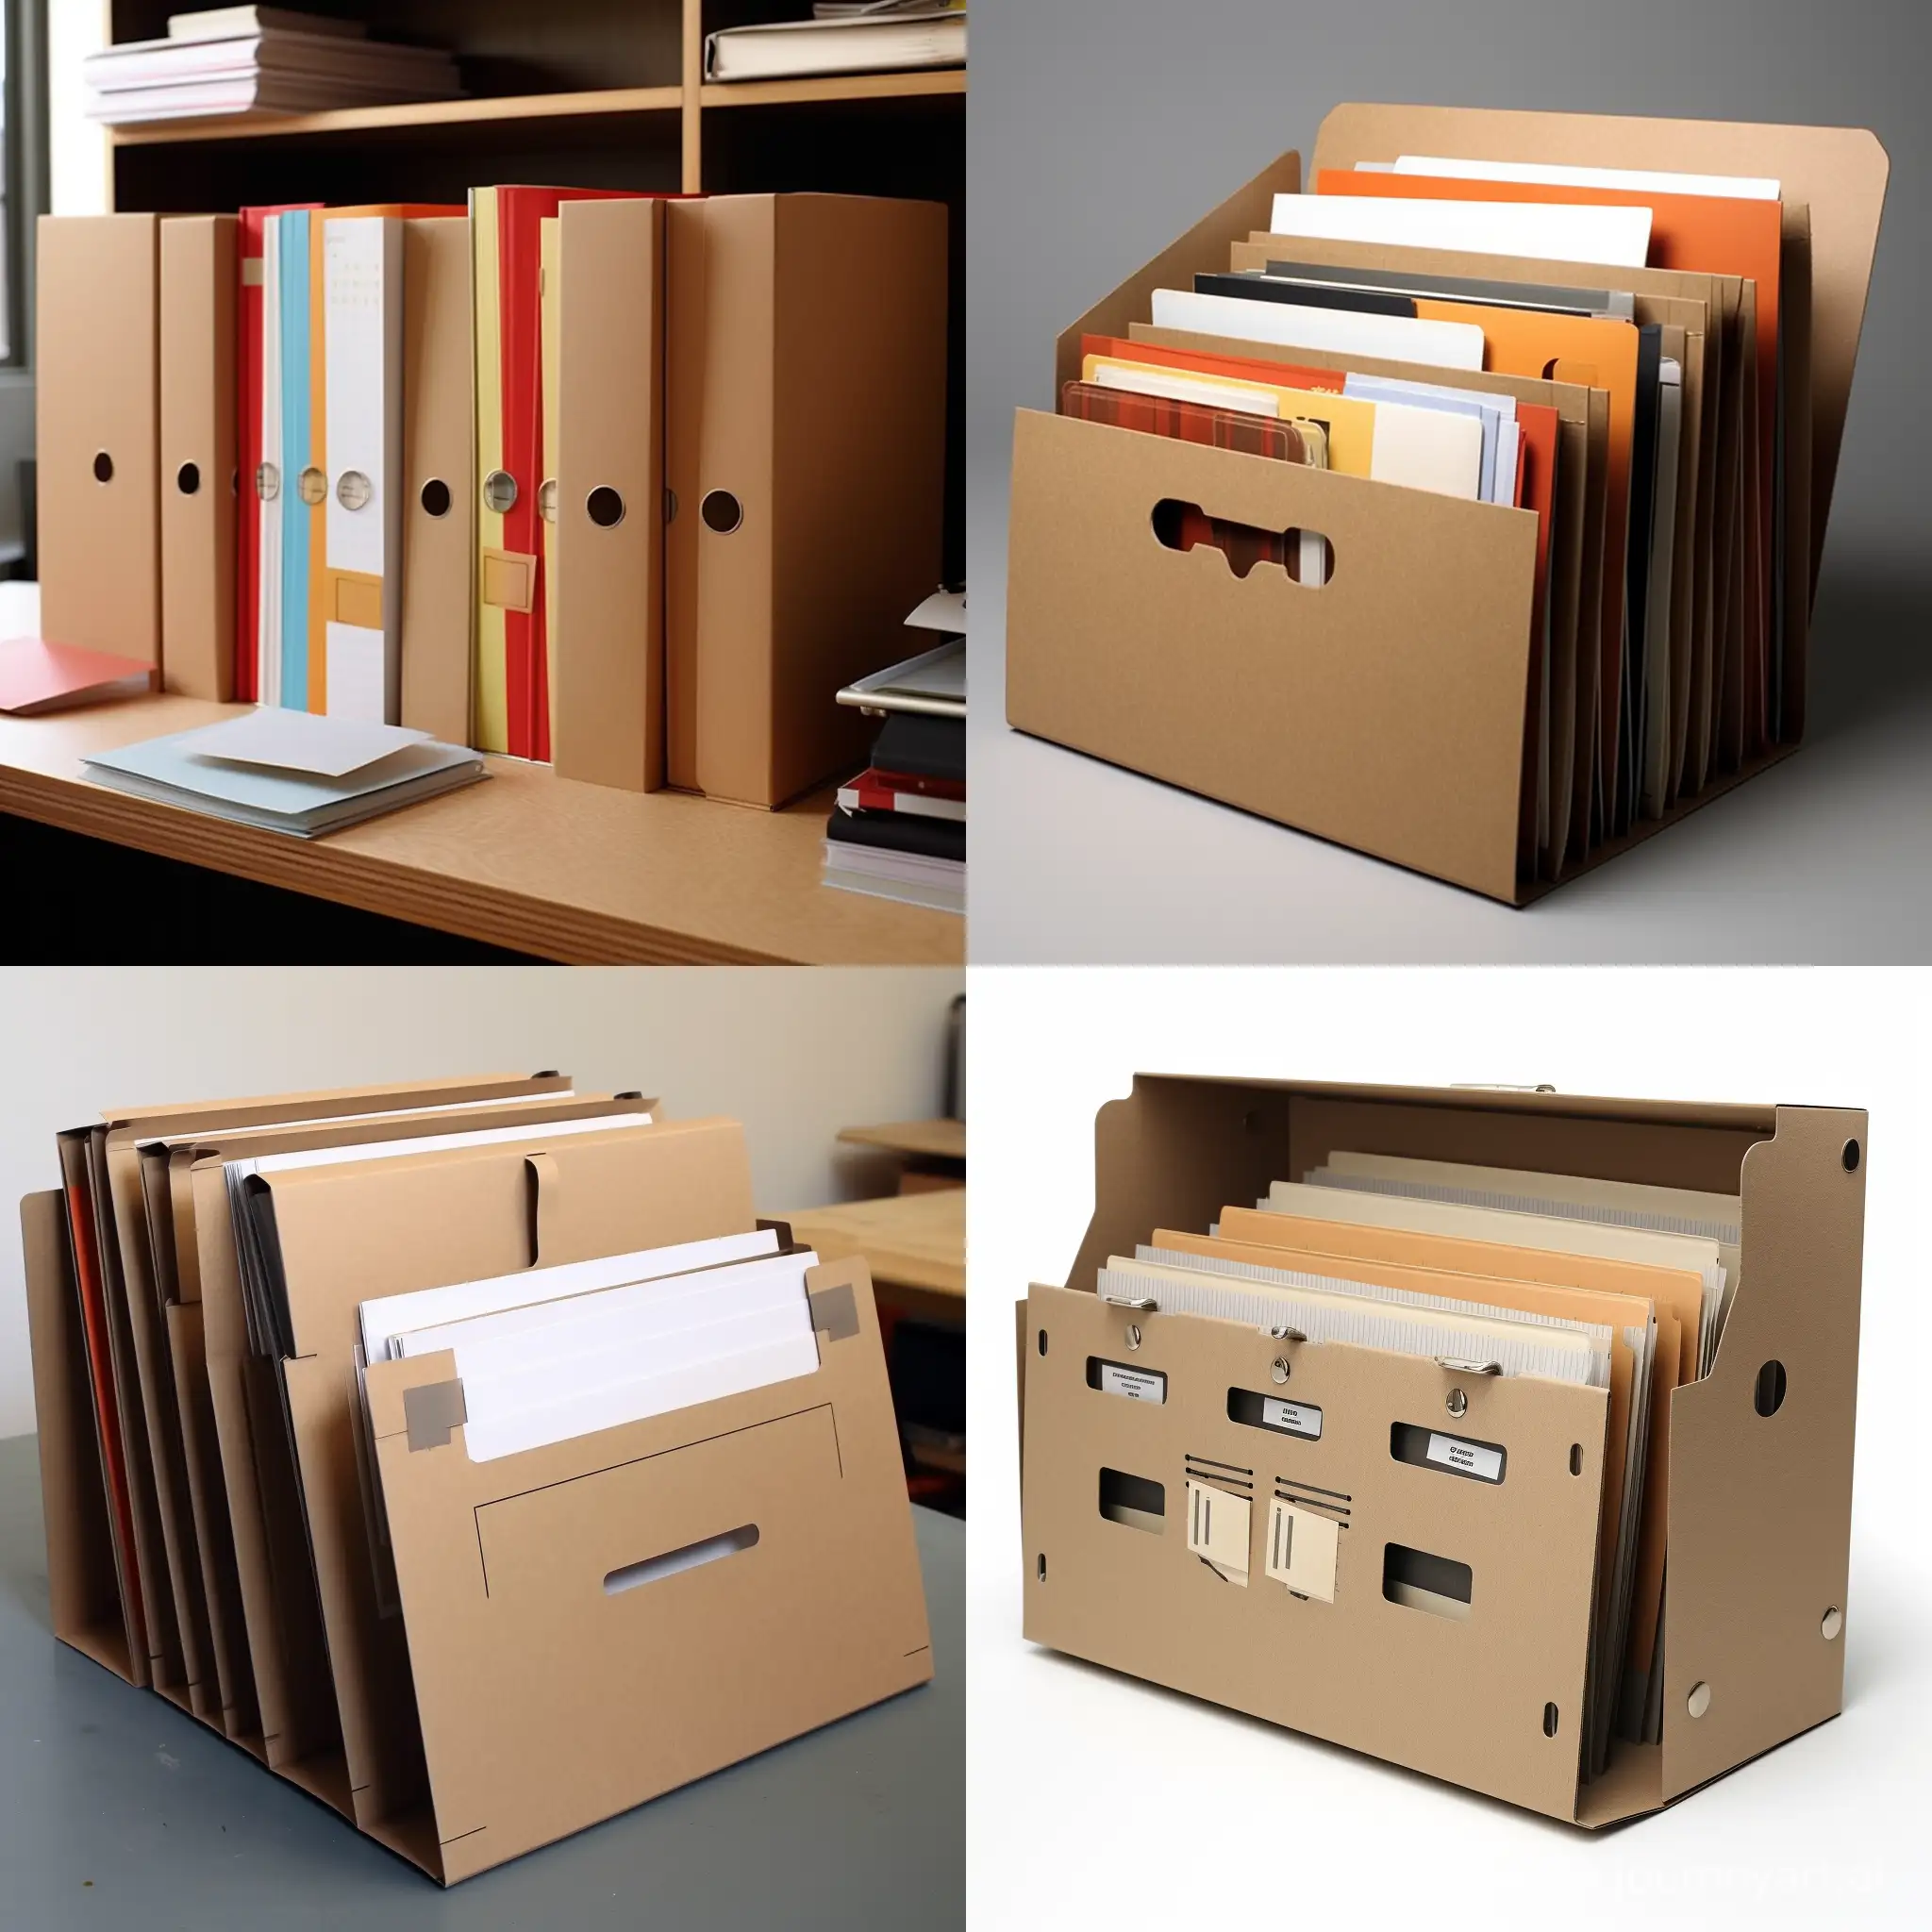 Effective-Document-Organization-with-11-Aspect-Ratio-Cardboard-Folders